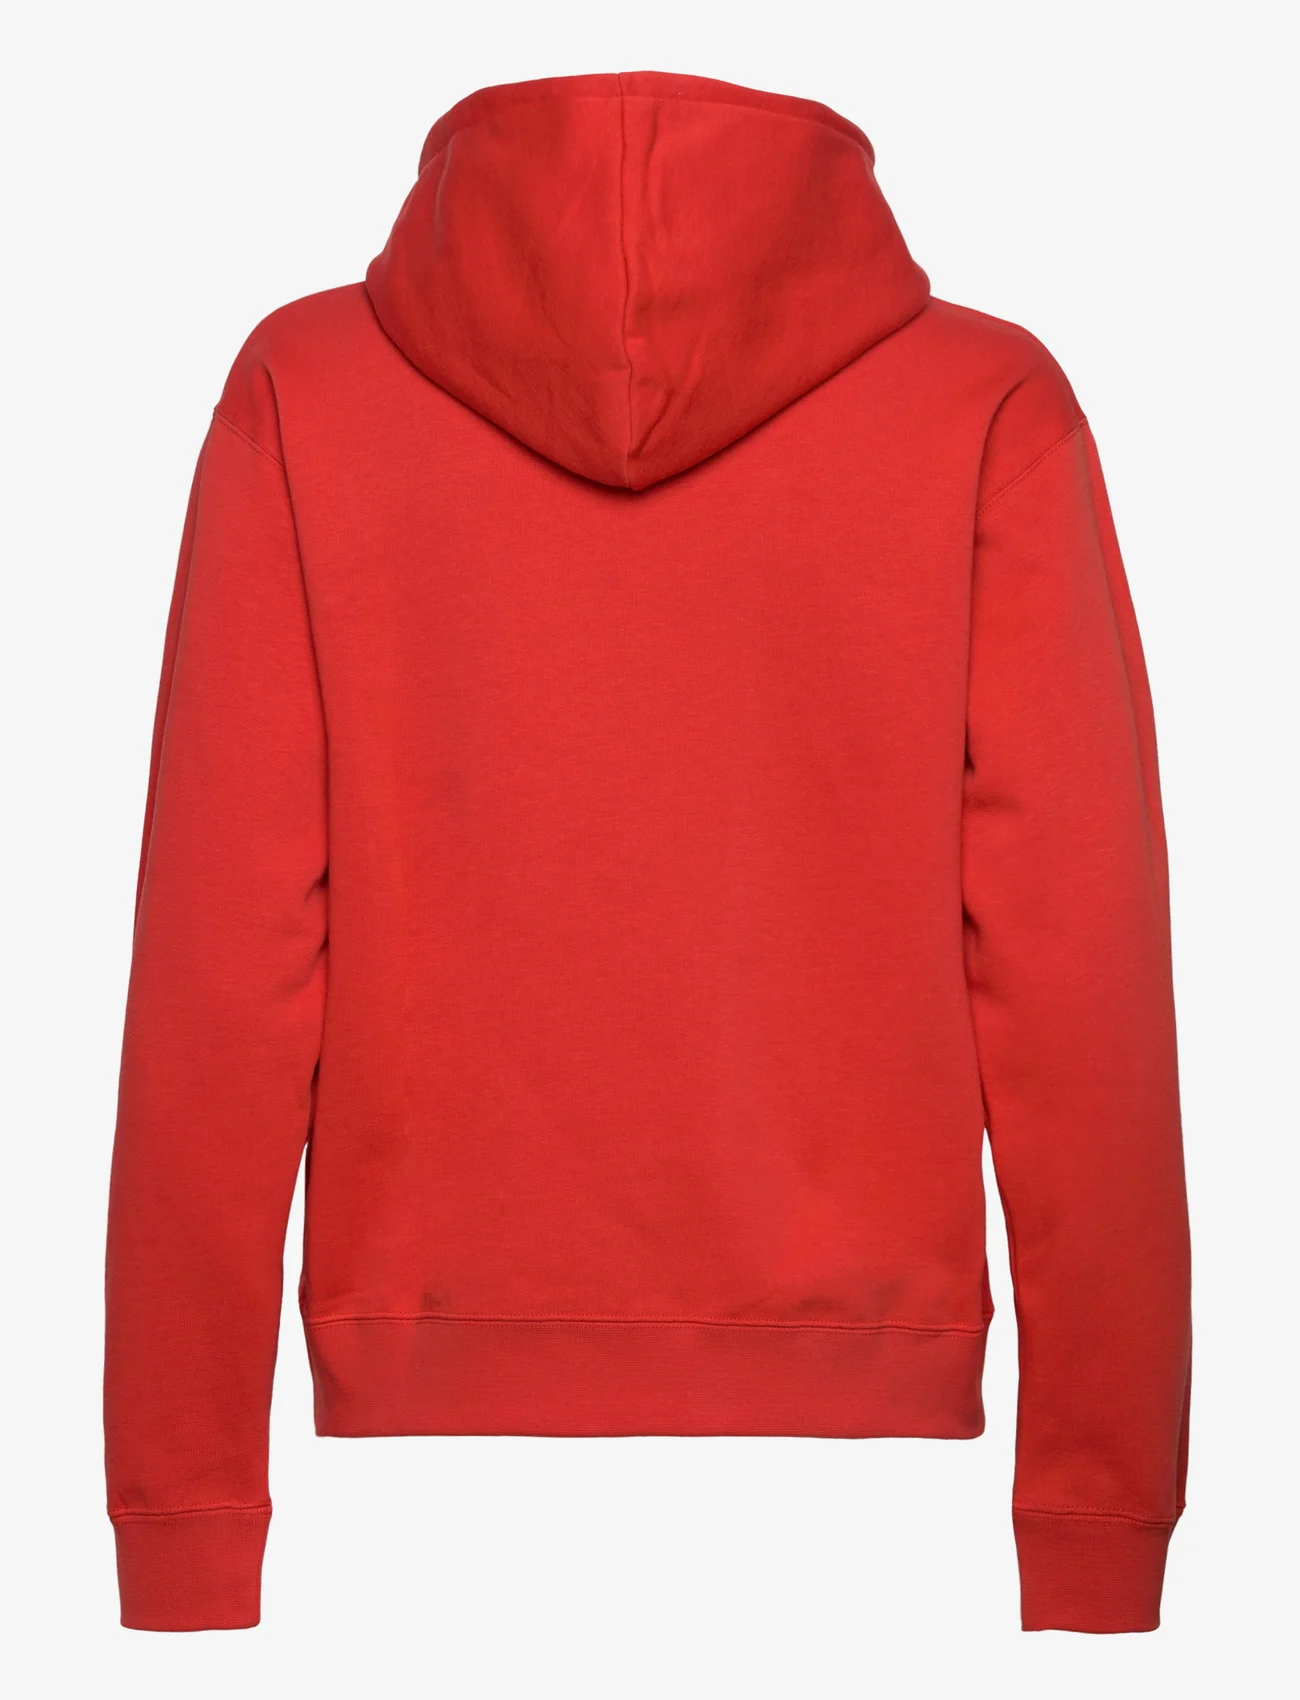 Double A by Wood Wood - Jenn arch hoodie - sweatshirts & hoodies - chili red - 1